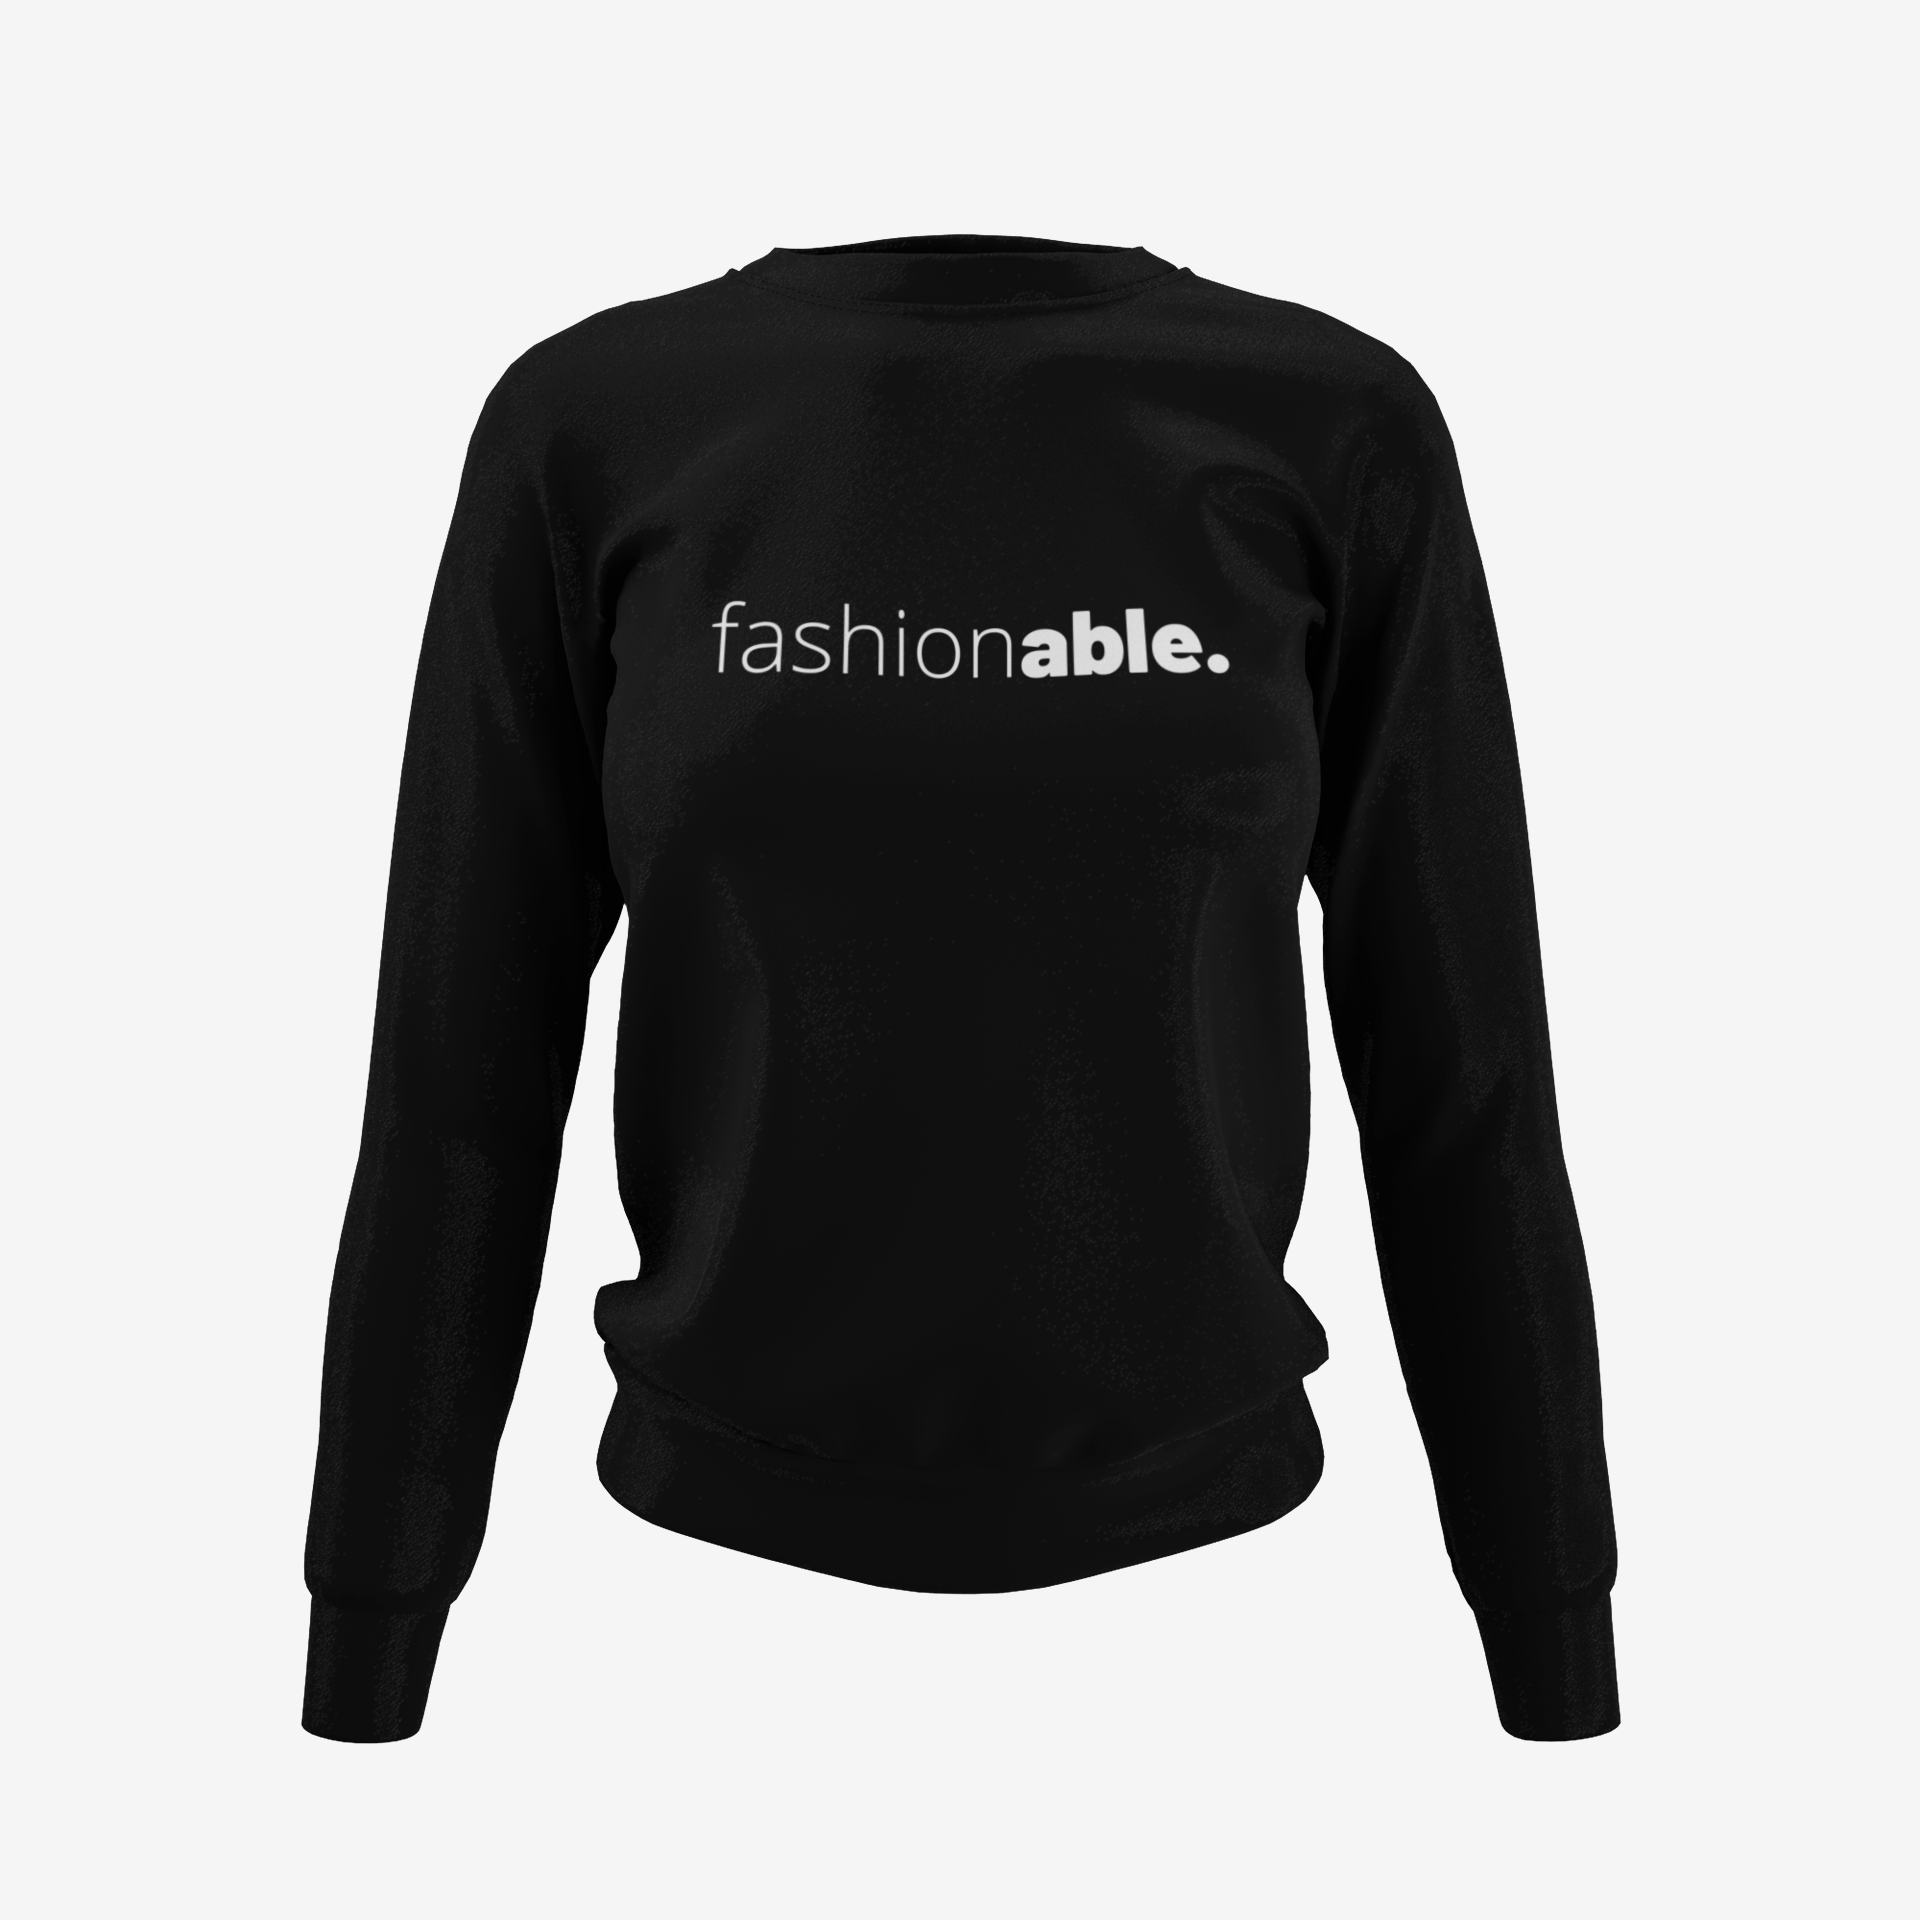 Fashionable Sweatshirt